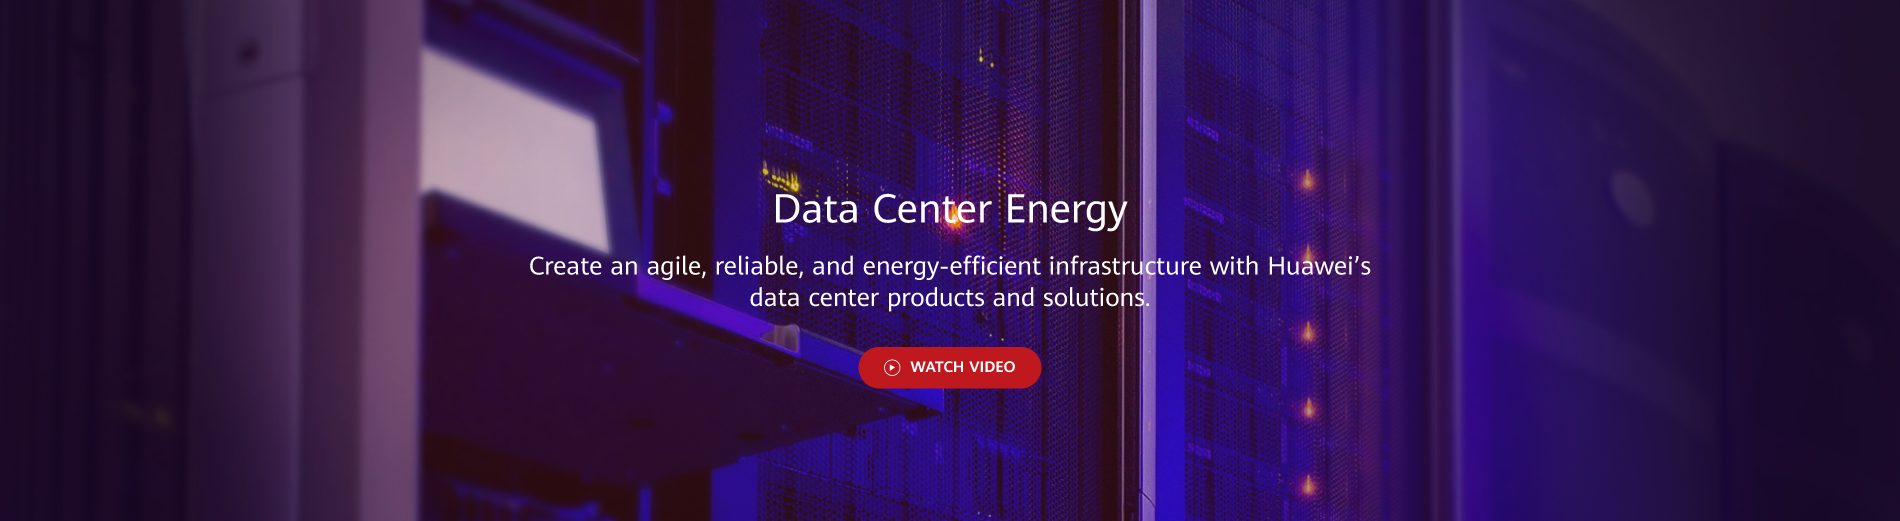 Huawei data center energy